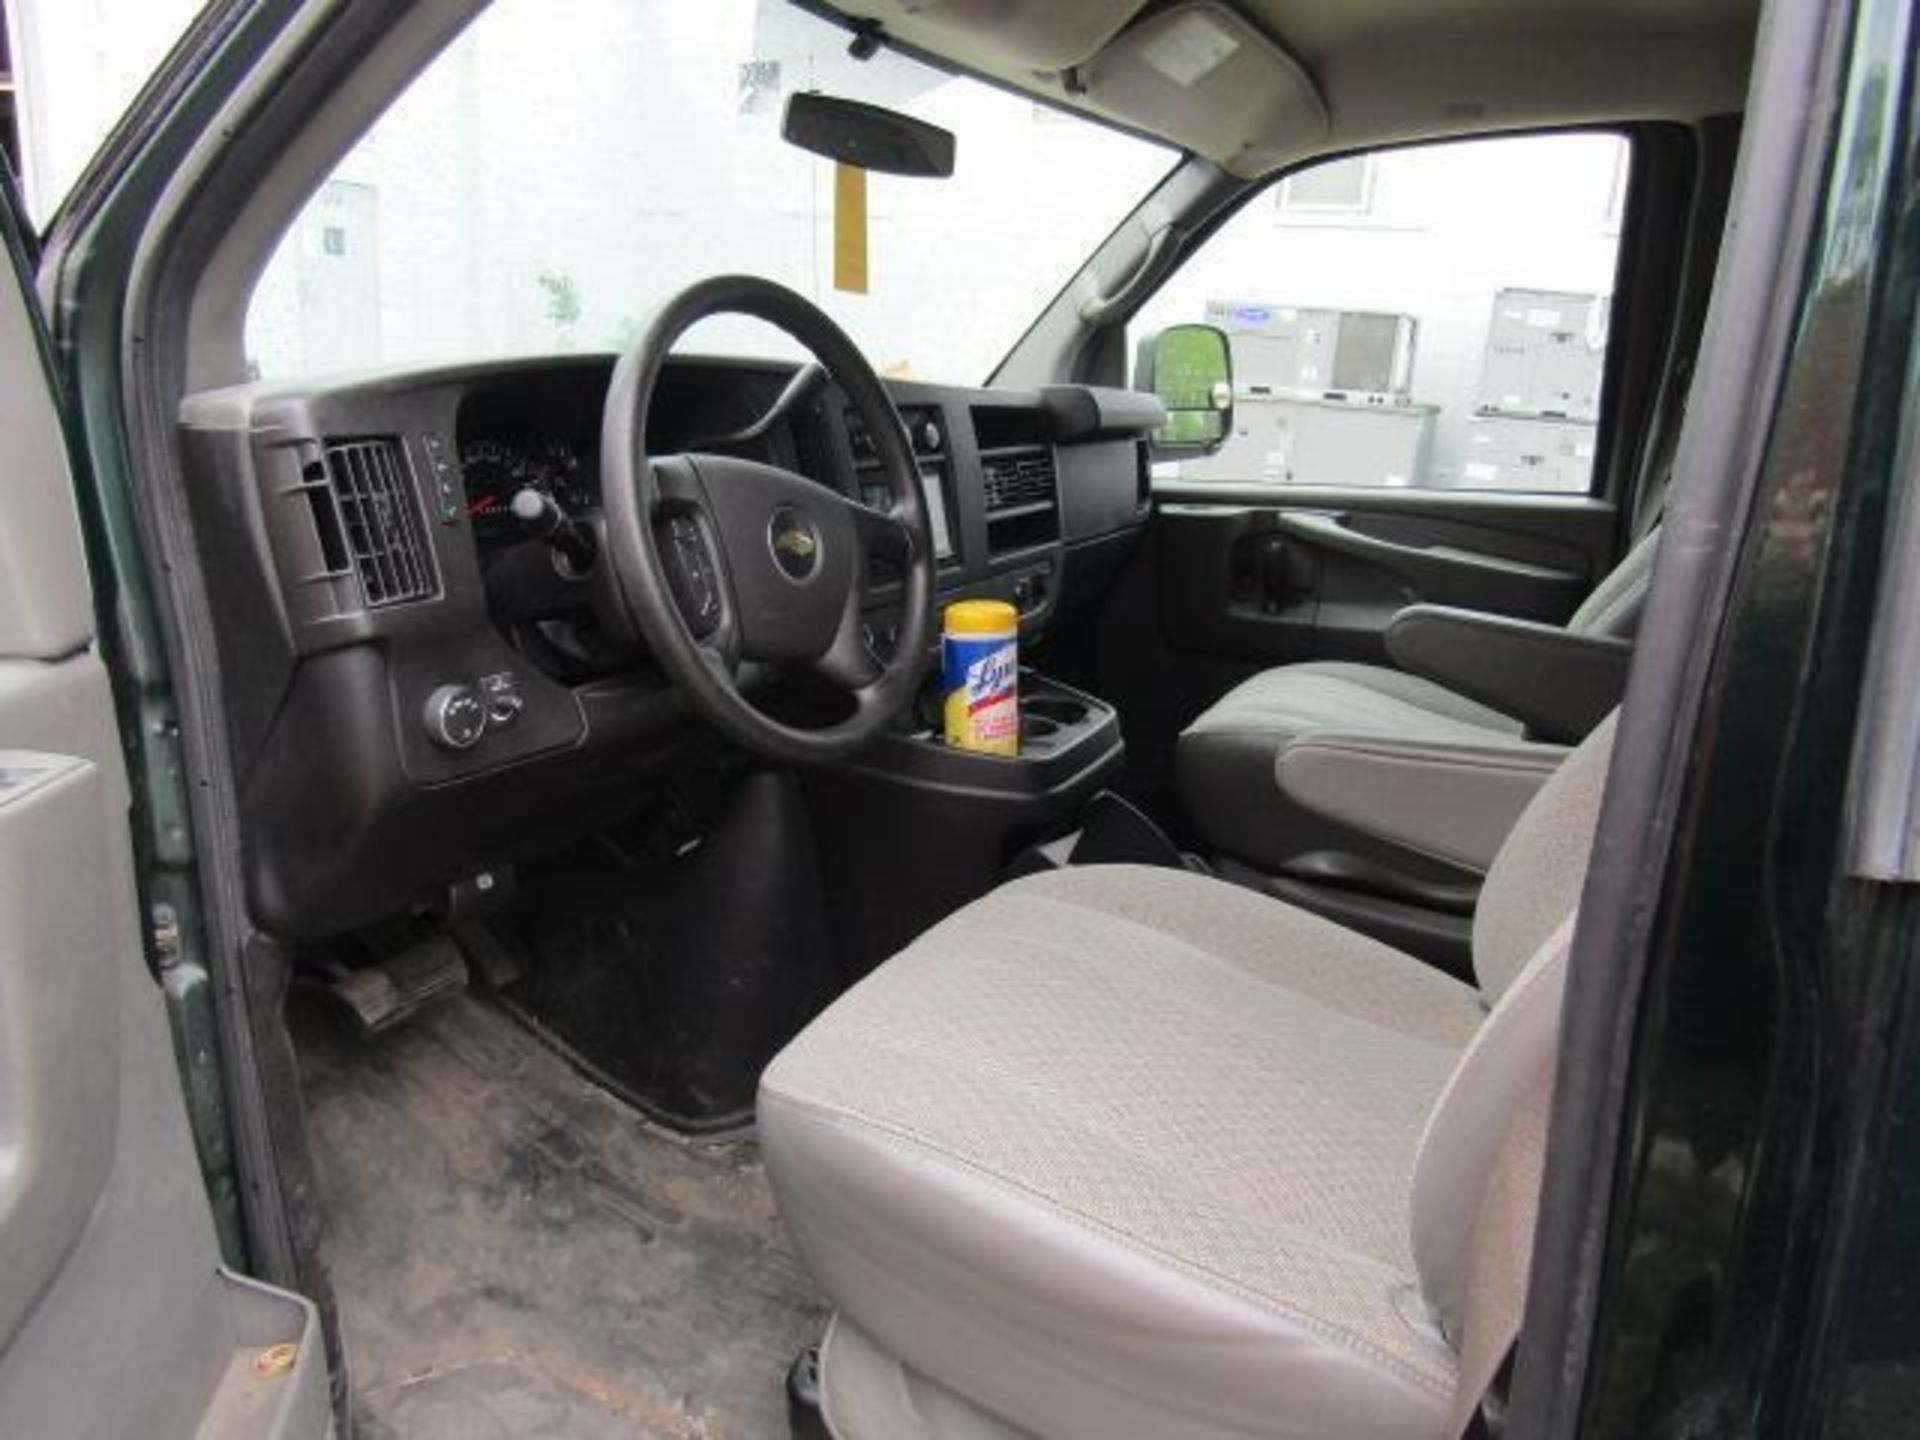 2014 Chevrolet Express Van Model G13405, VIN 1GCSGAFX1E1134256, Rubber Mats, Front Seat Partition to - Image 6 of 14